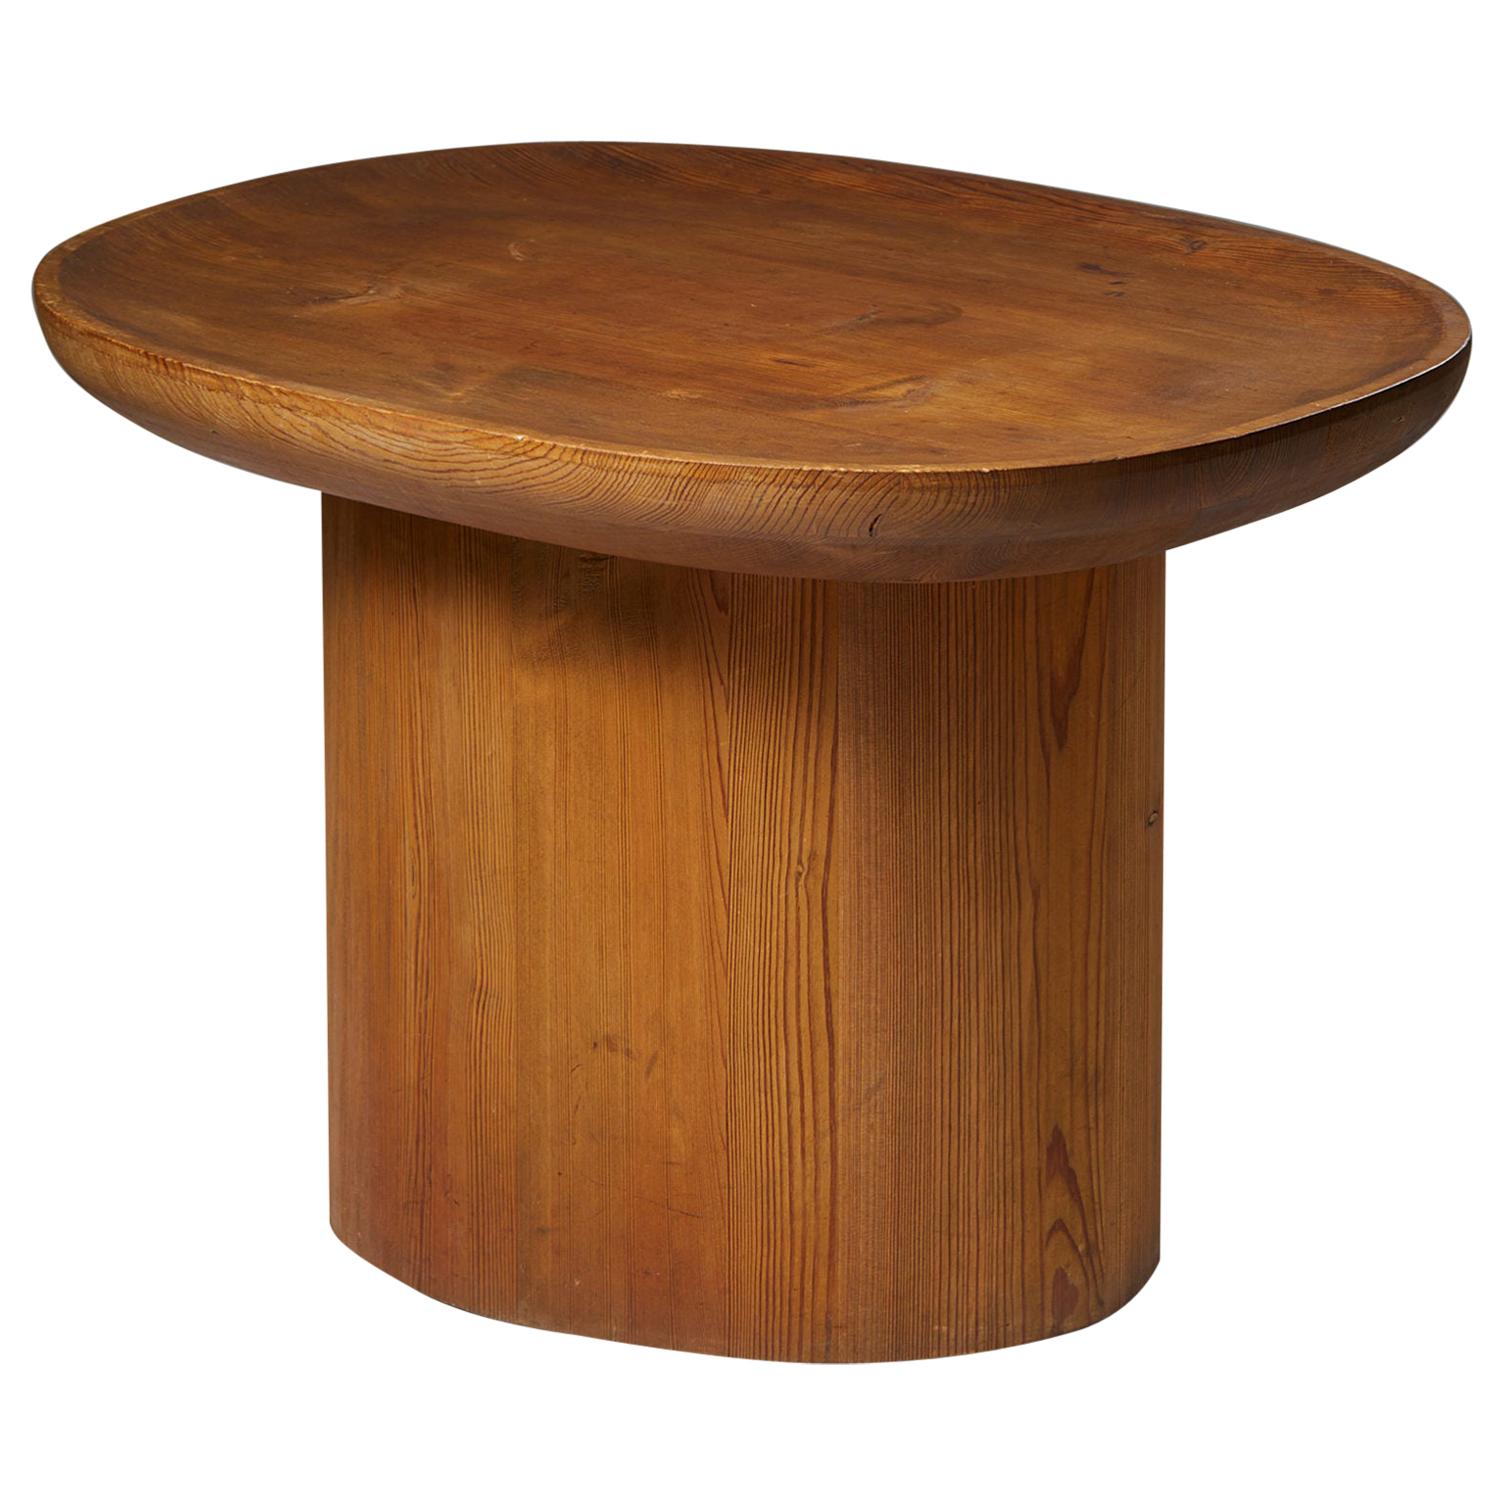 Table "Utö" Designed by Axel Einar Hjorth for Nordiska Kompaniet, Sweden, 1932